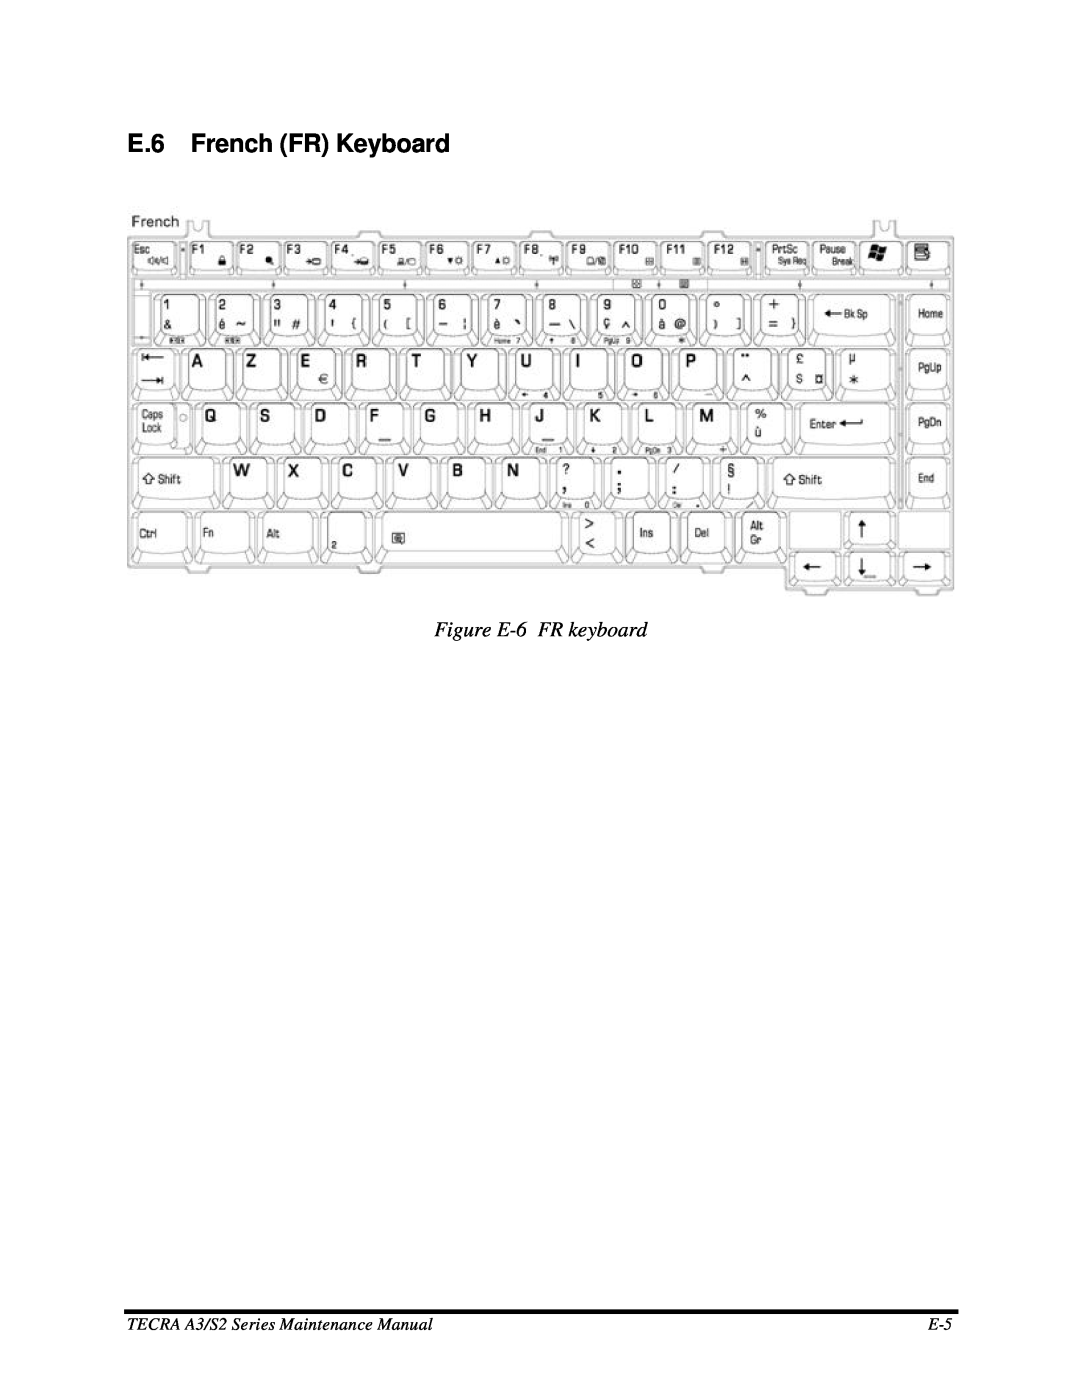 Toshiba manual E.6 French FR Keyboard, Figure E-6 FR keyboard, TECRA A3/S2 Series Maintenance Manual 